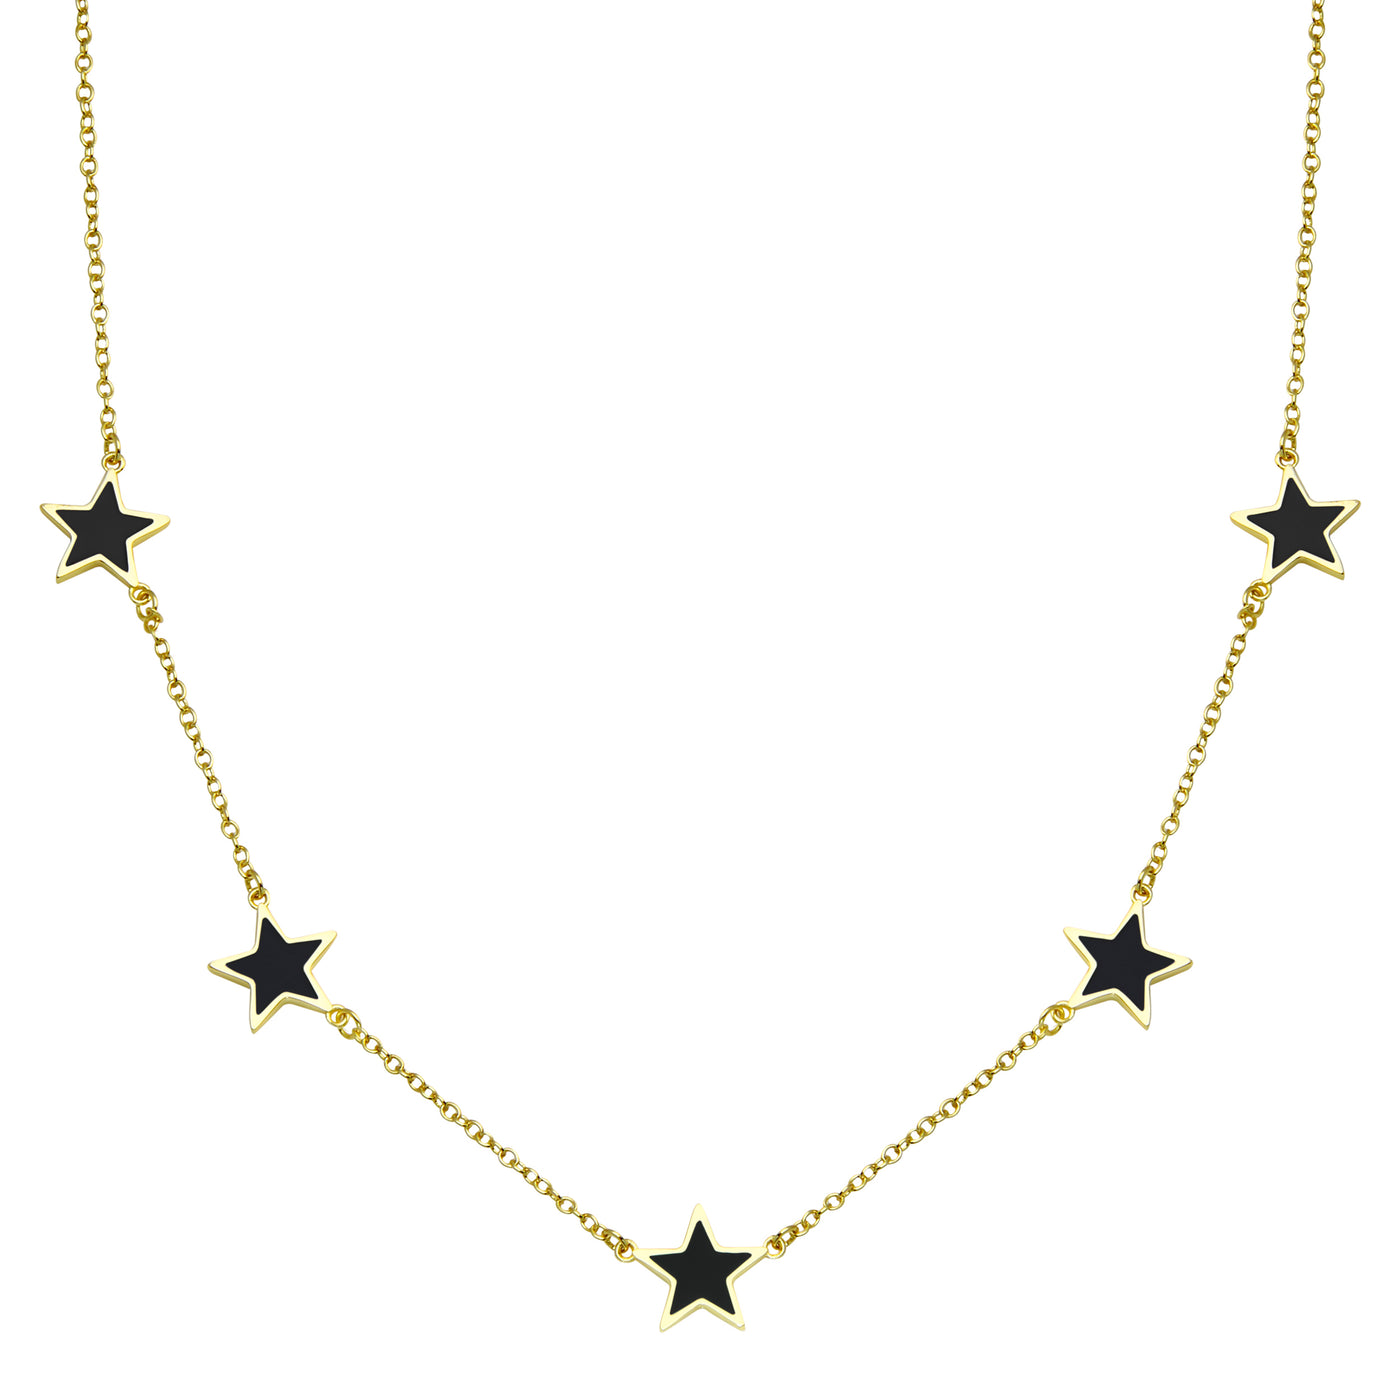 Black Enamel Star Necklace